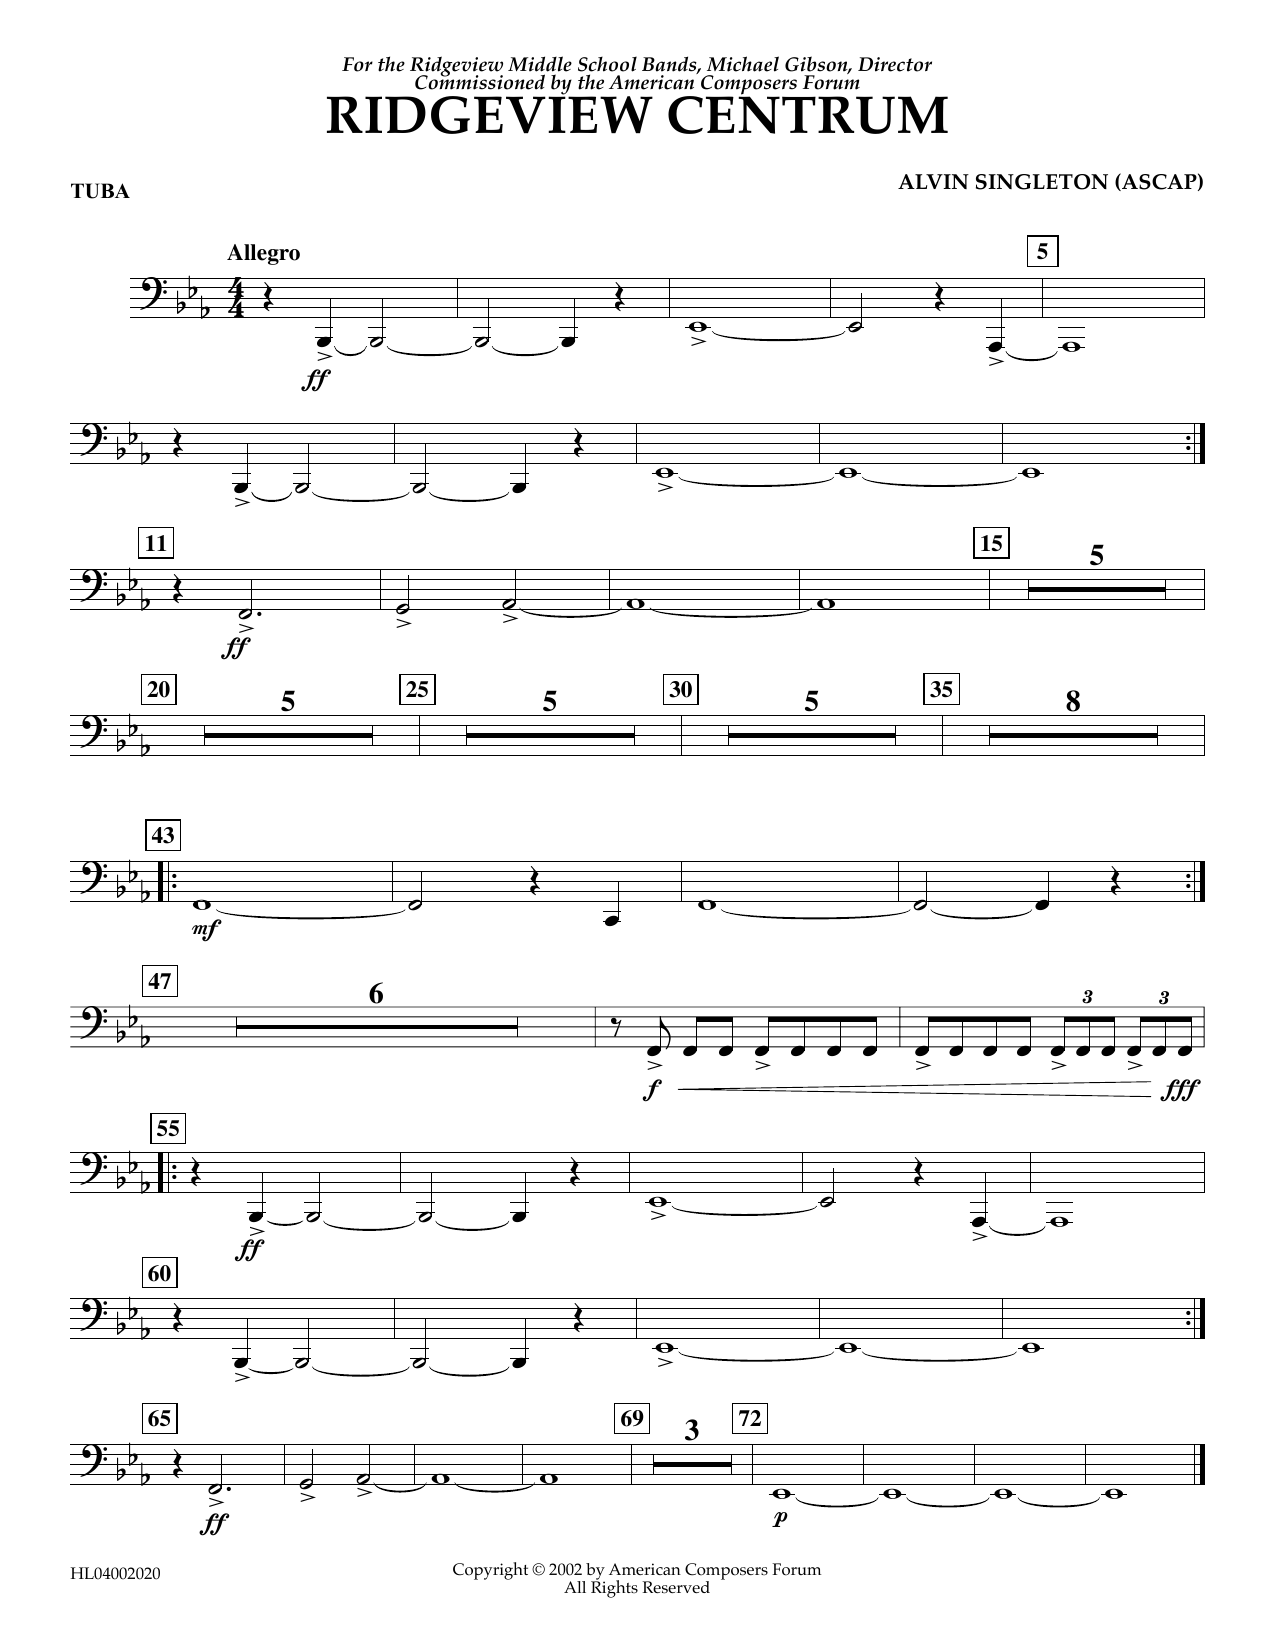 Alvin Singleton Ridgeview Centrum - Tuba Sheet Music Notes & Chords for Concert Band - Download or Print PDF